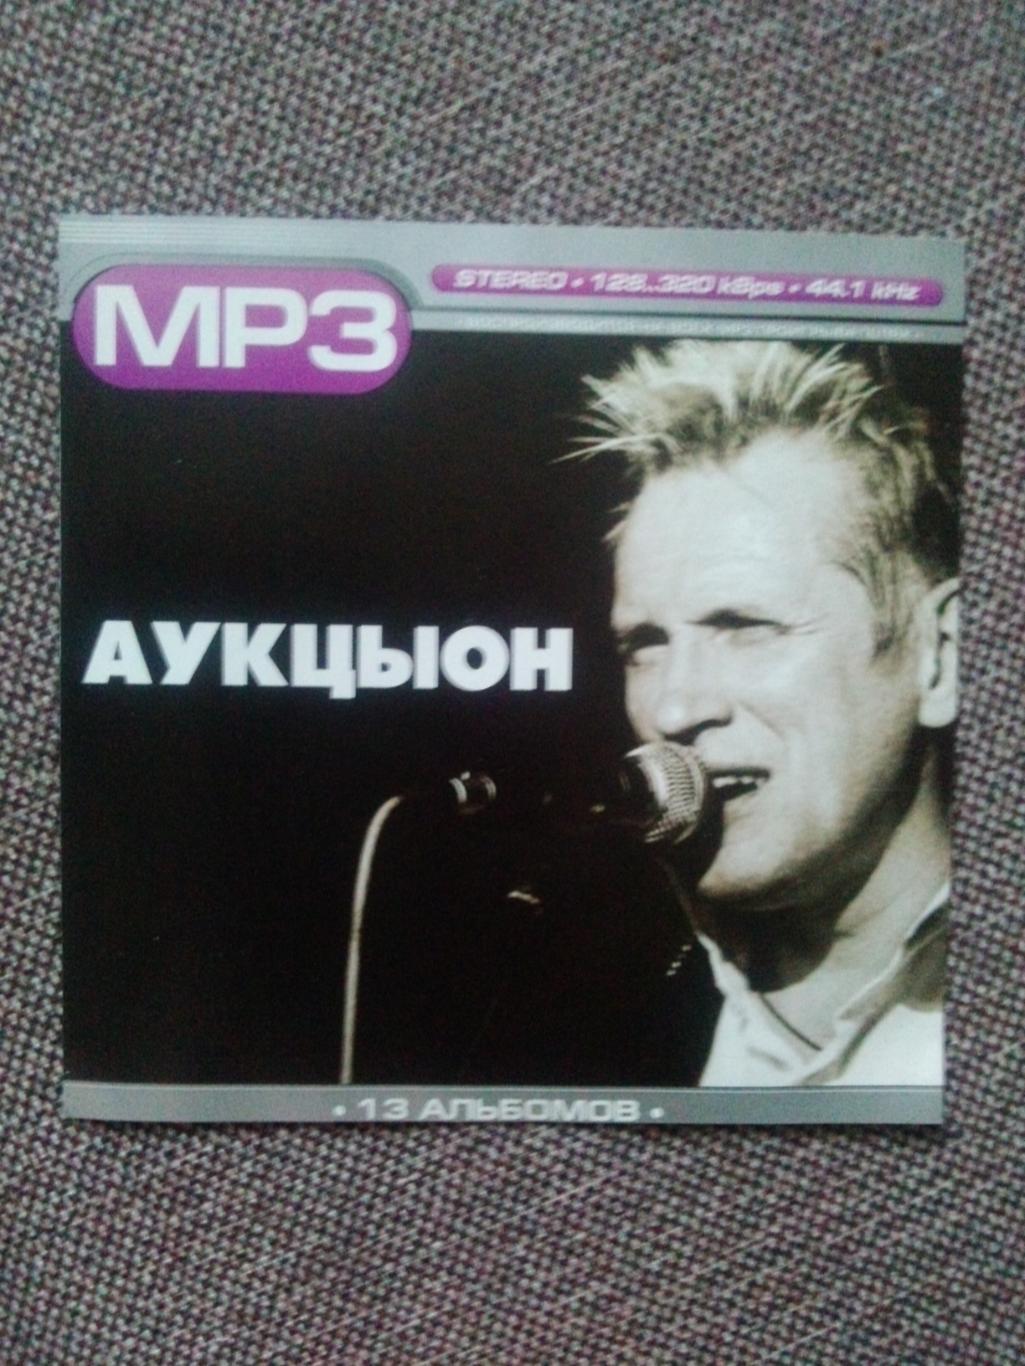 MP - 3 CD диск : группаАукцыон13 альбомов (Русская рок - музыка)